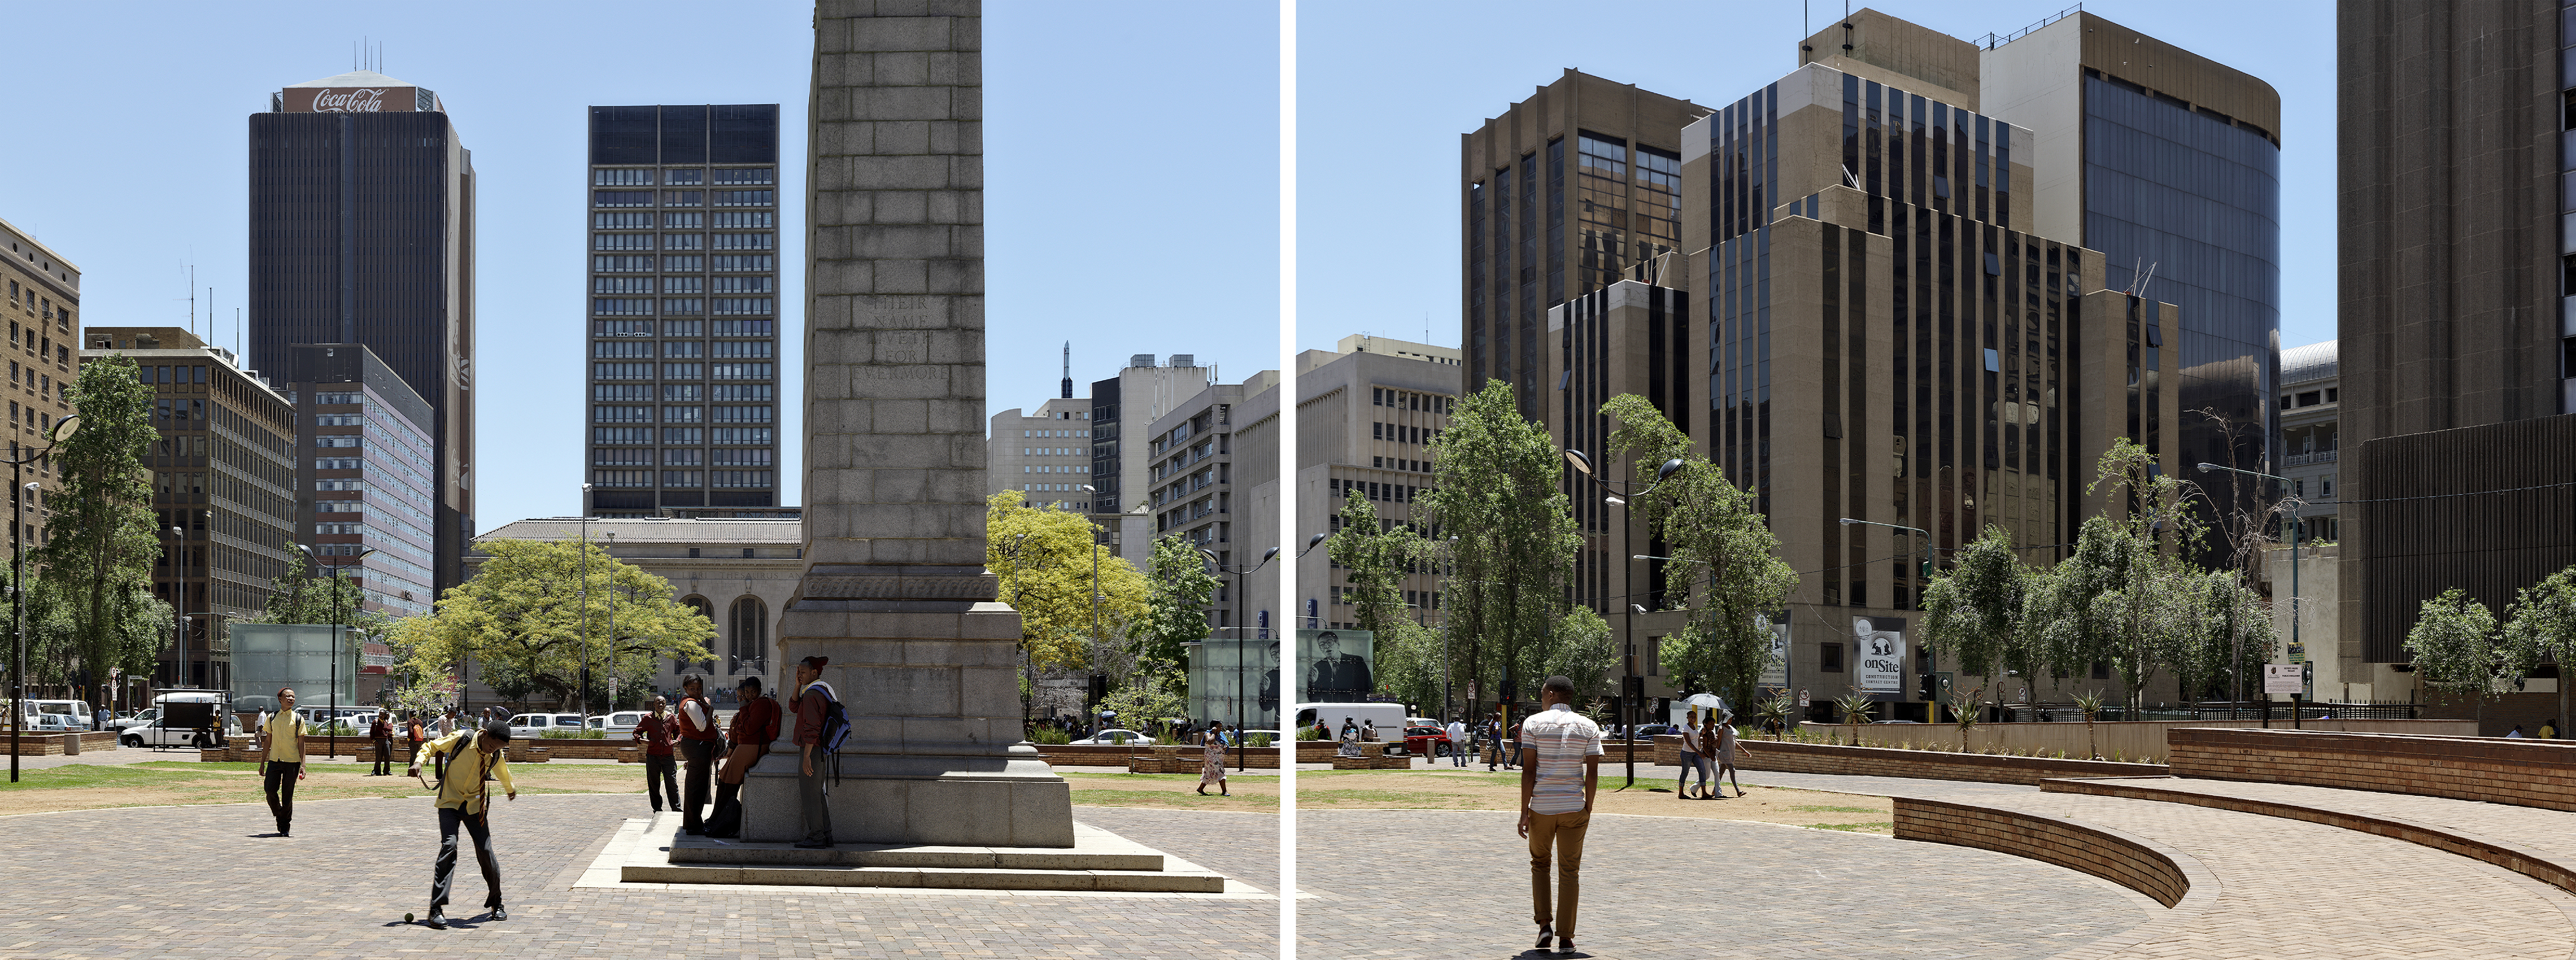  - Beyers Naudé Square, Johannesburg, South Africa, 2014, 